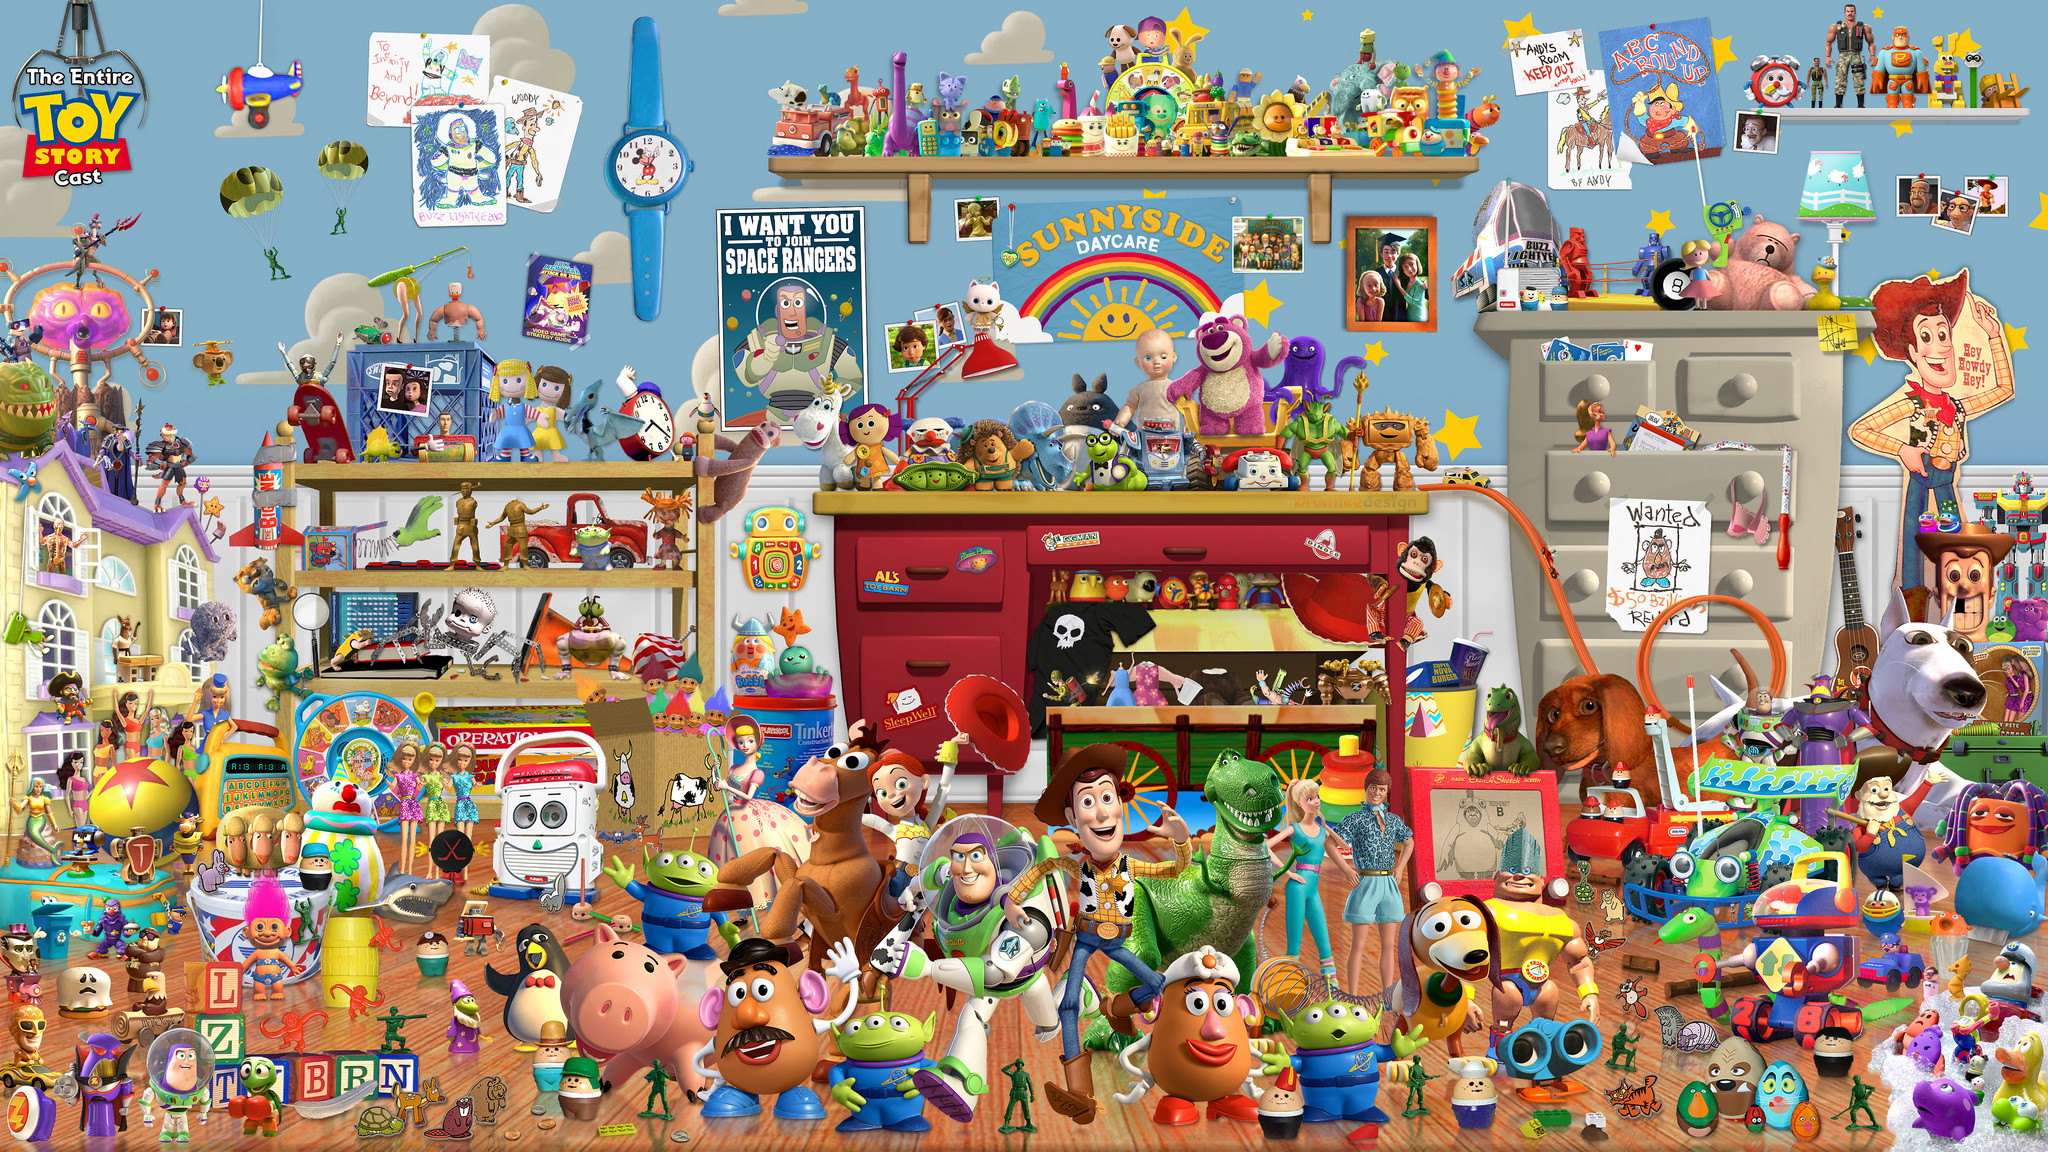 Toy Story Wallpaper For Desktop 55 Images